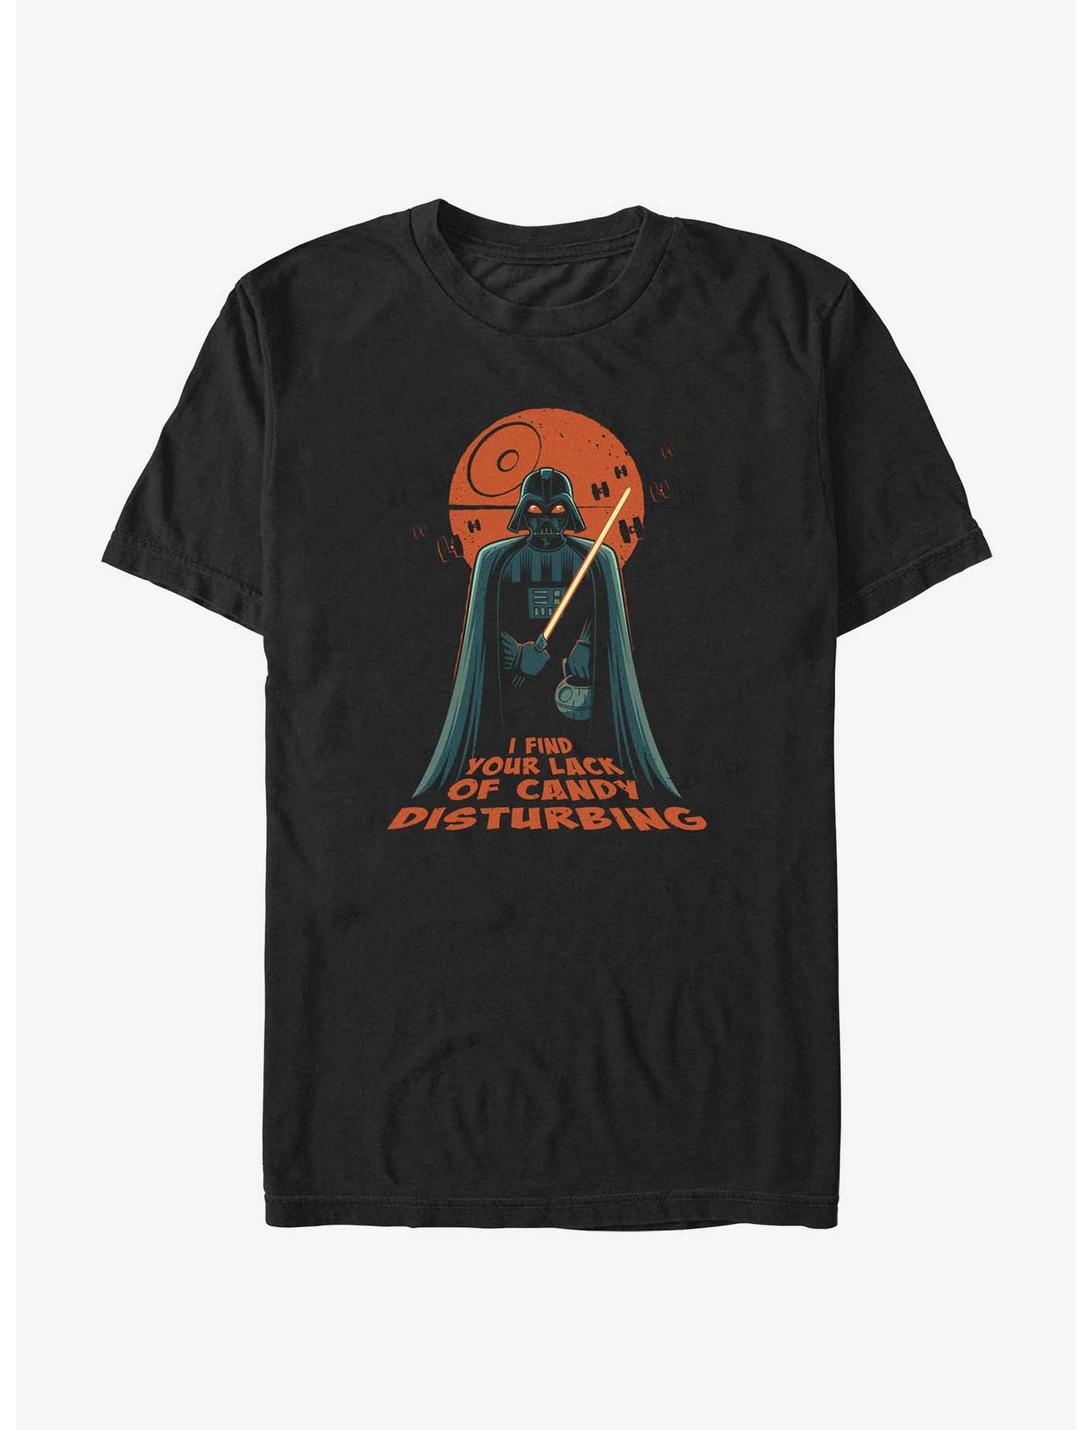 Star Wars Vader Disturbing Lack of Candy T-Shirt, BLACK, hi-res